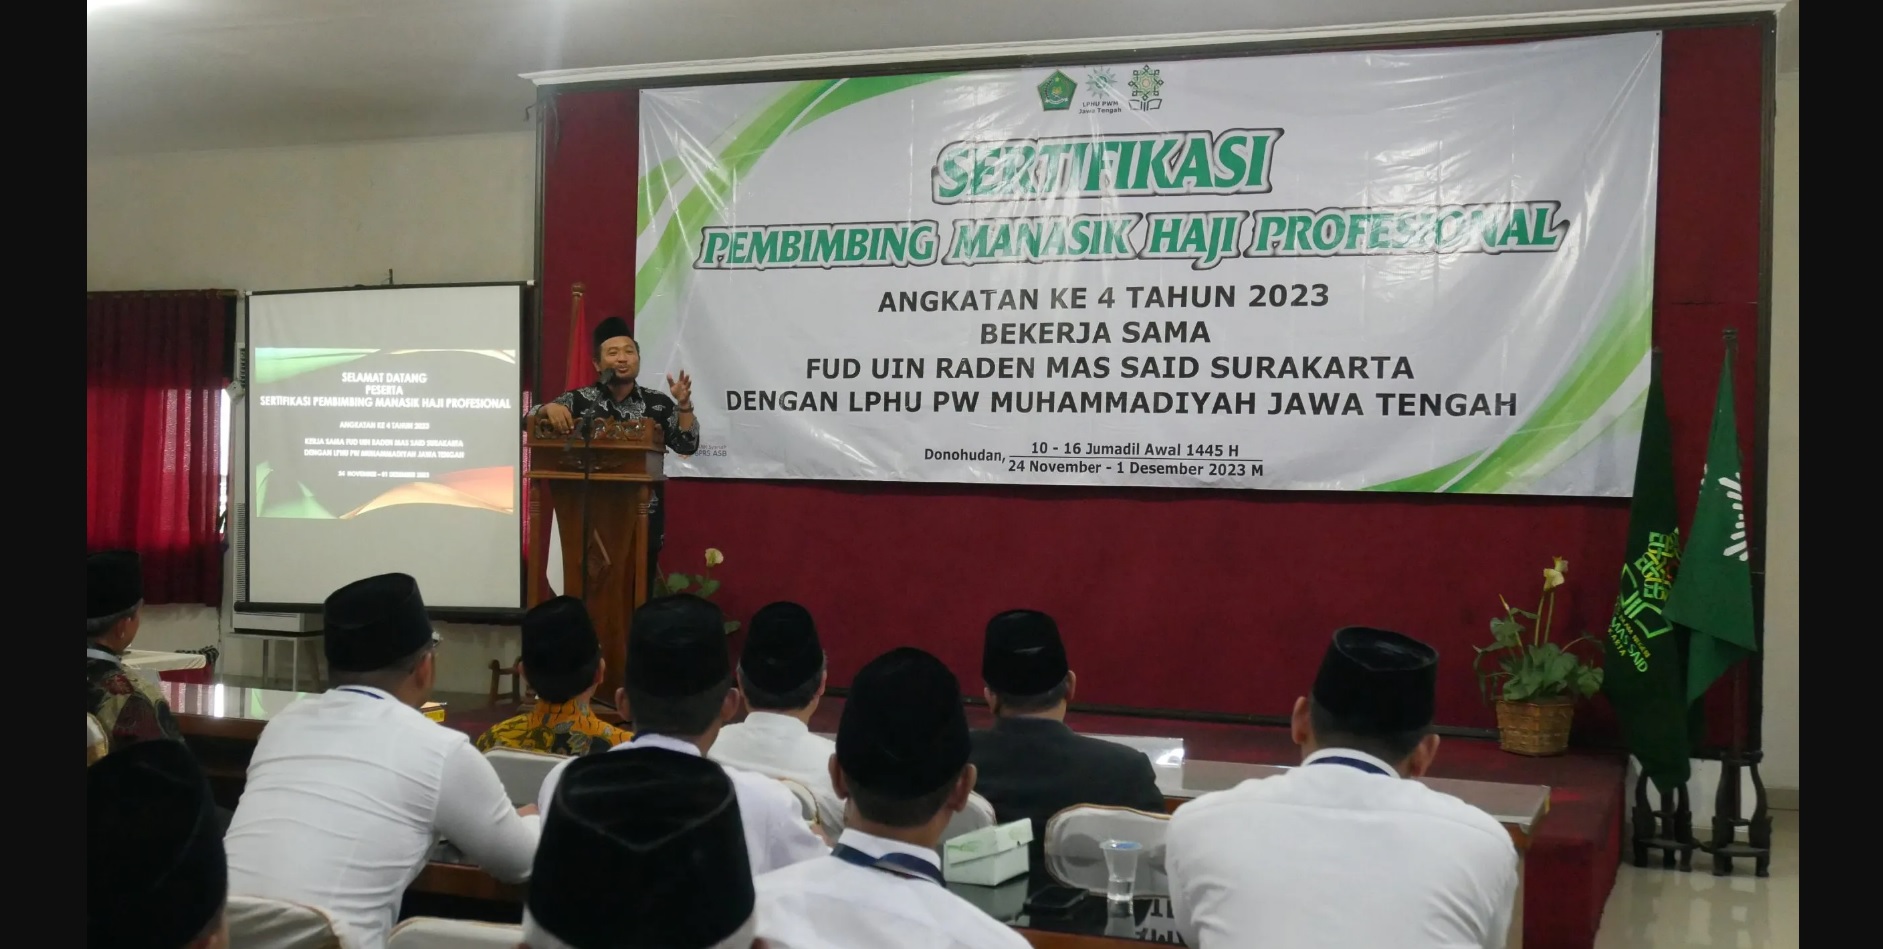 FUD UIN RM Said Surakarta Berikan Sertifikasi Pembimbing Manasik Haji dan Umroh Profesional